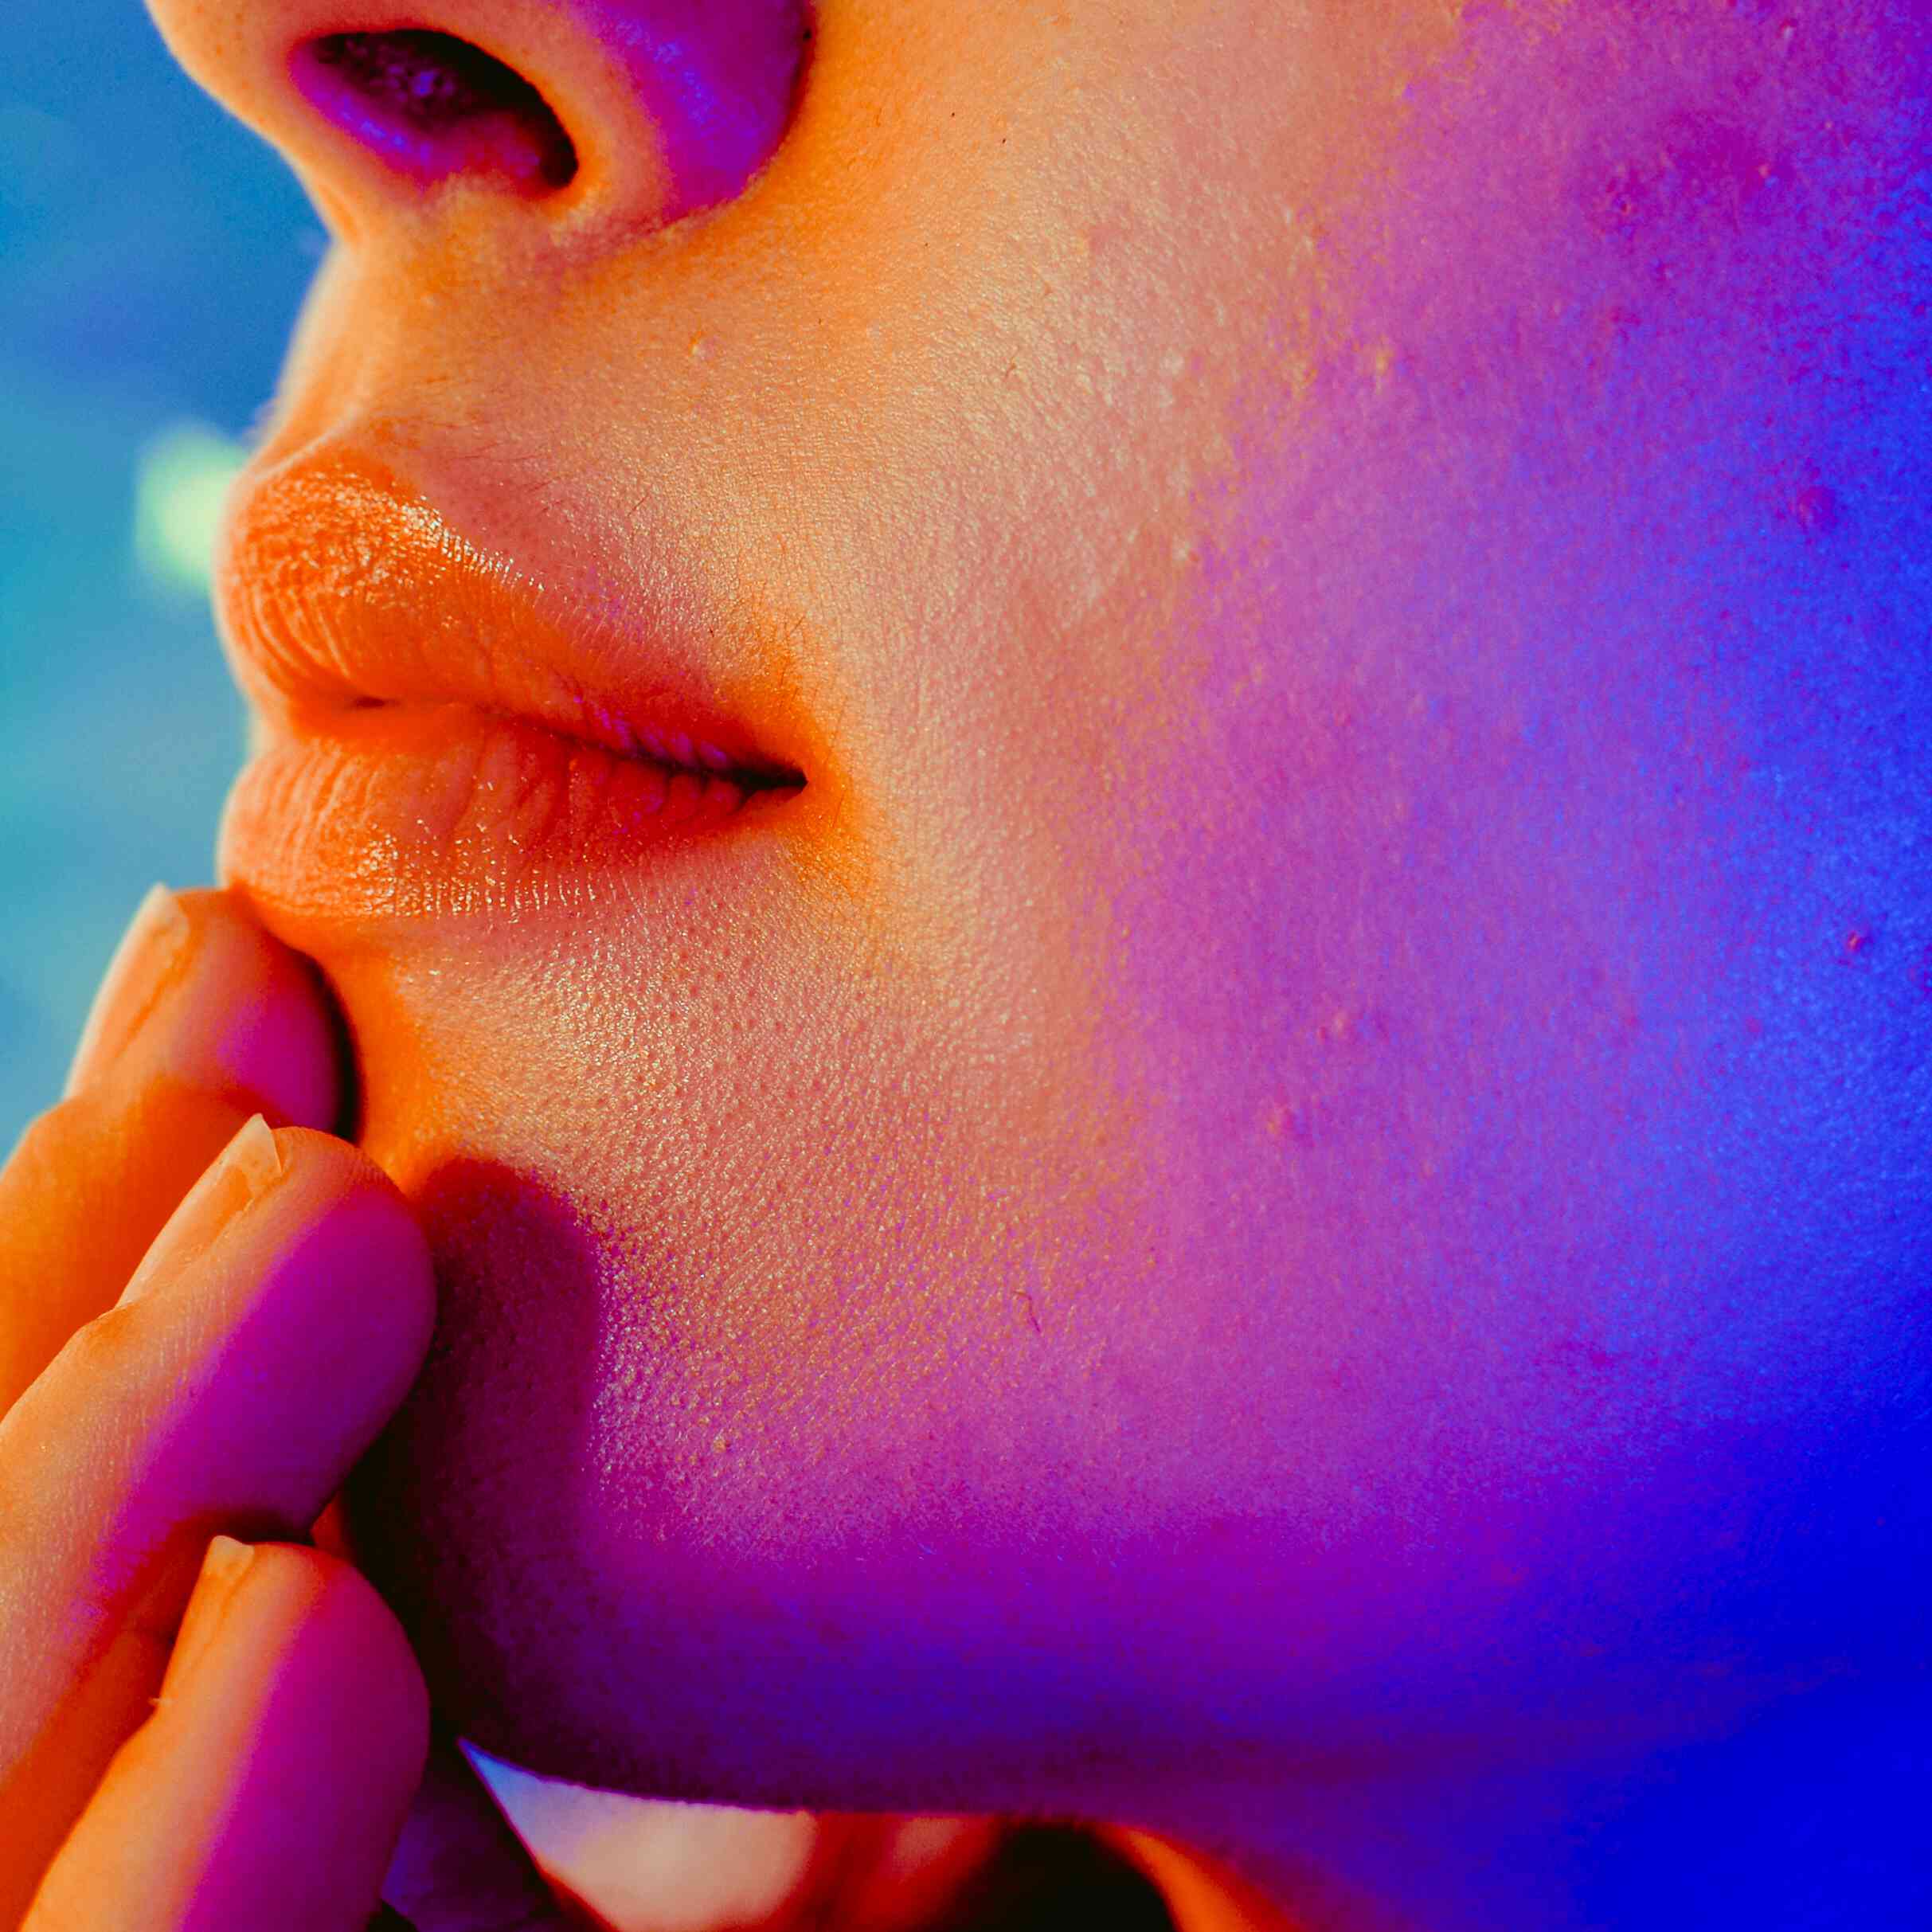 Close-up of acne